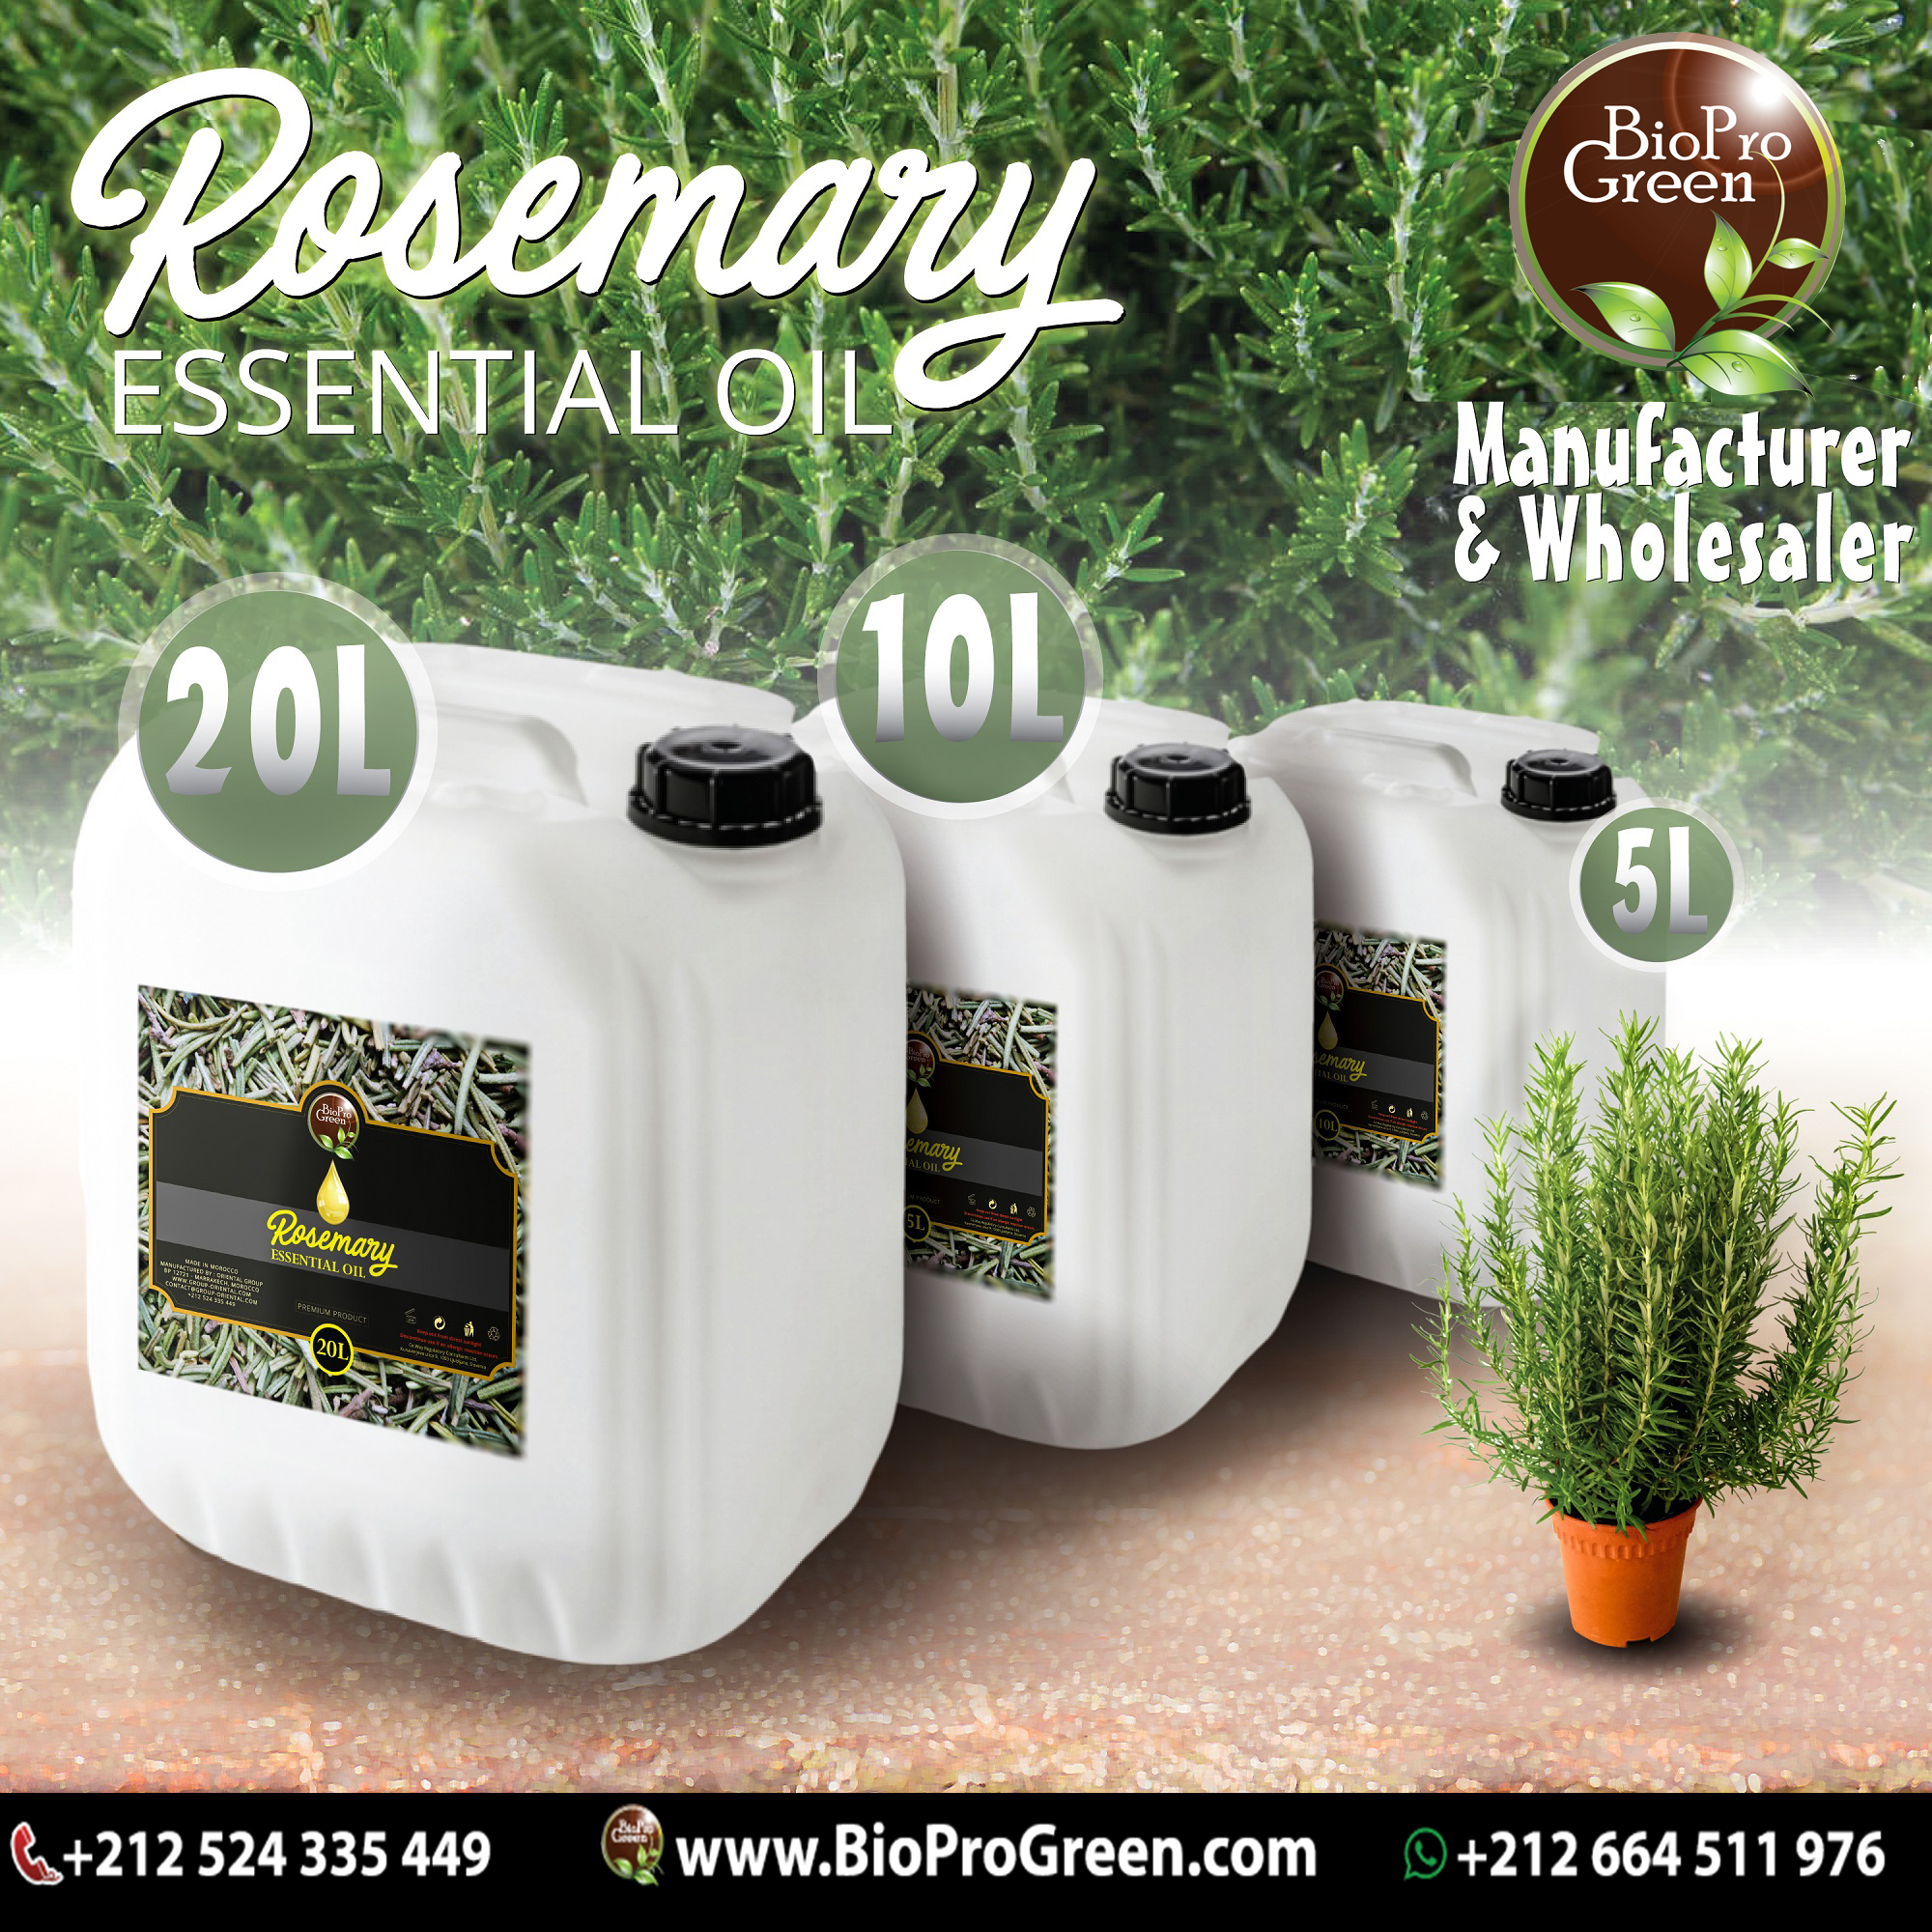 Rosemary parfumes 